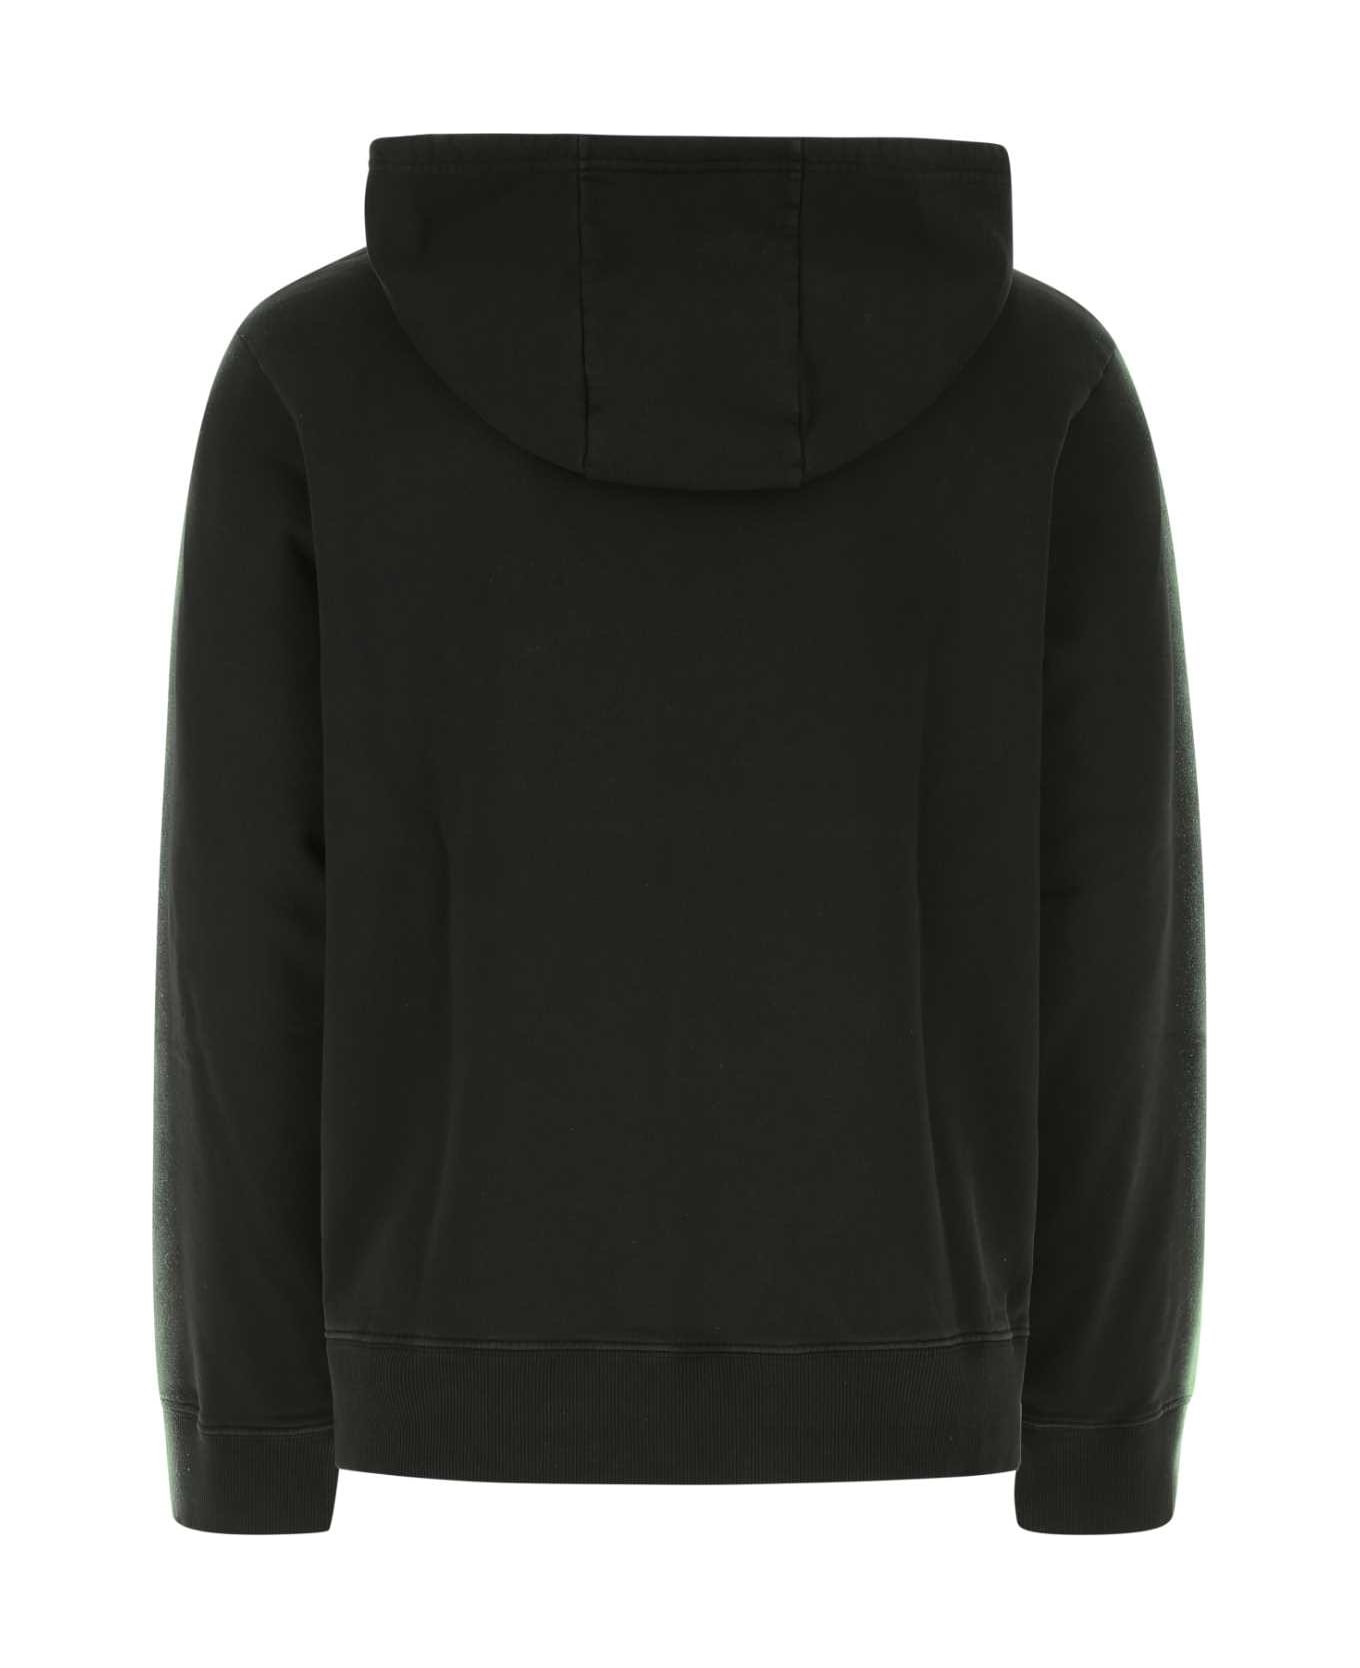 Koché Black Cotton Oversize Sweatshirt - 900